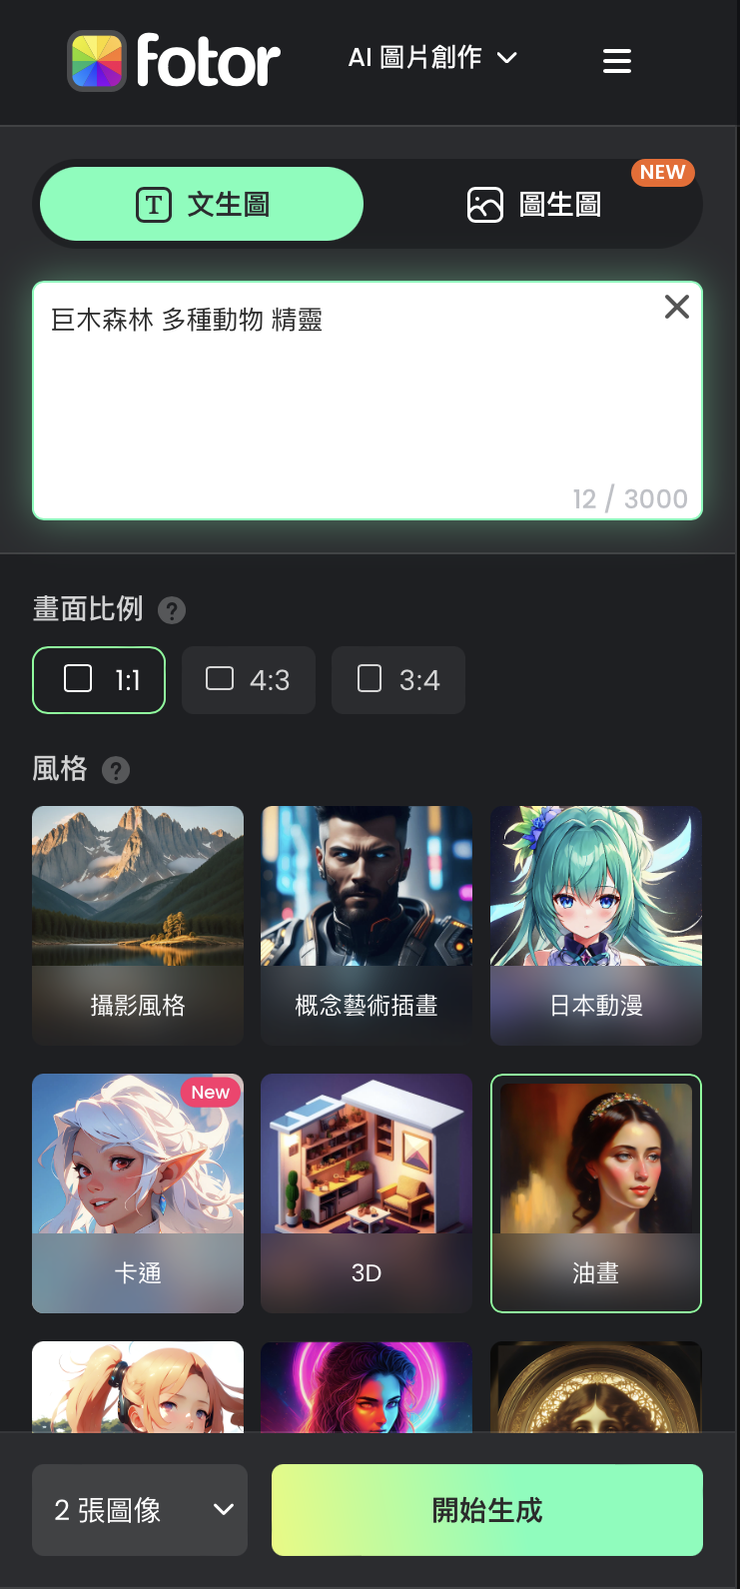 Fotor的全中文介面很容易上手。